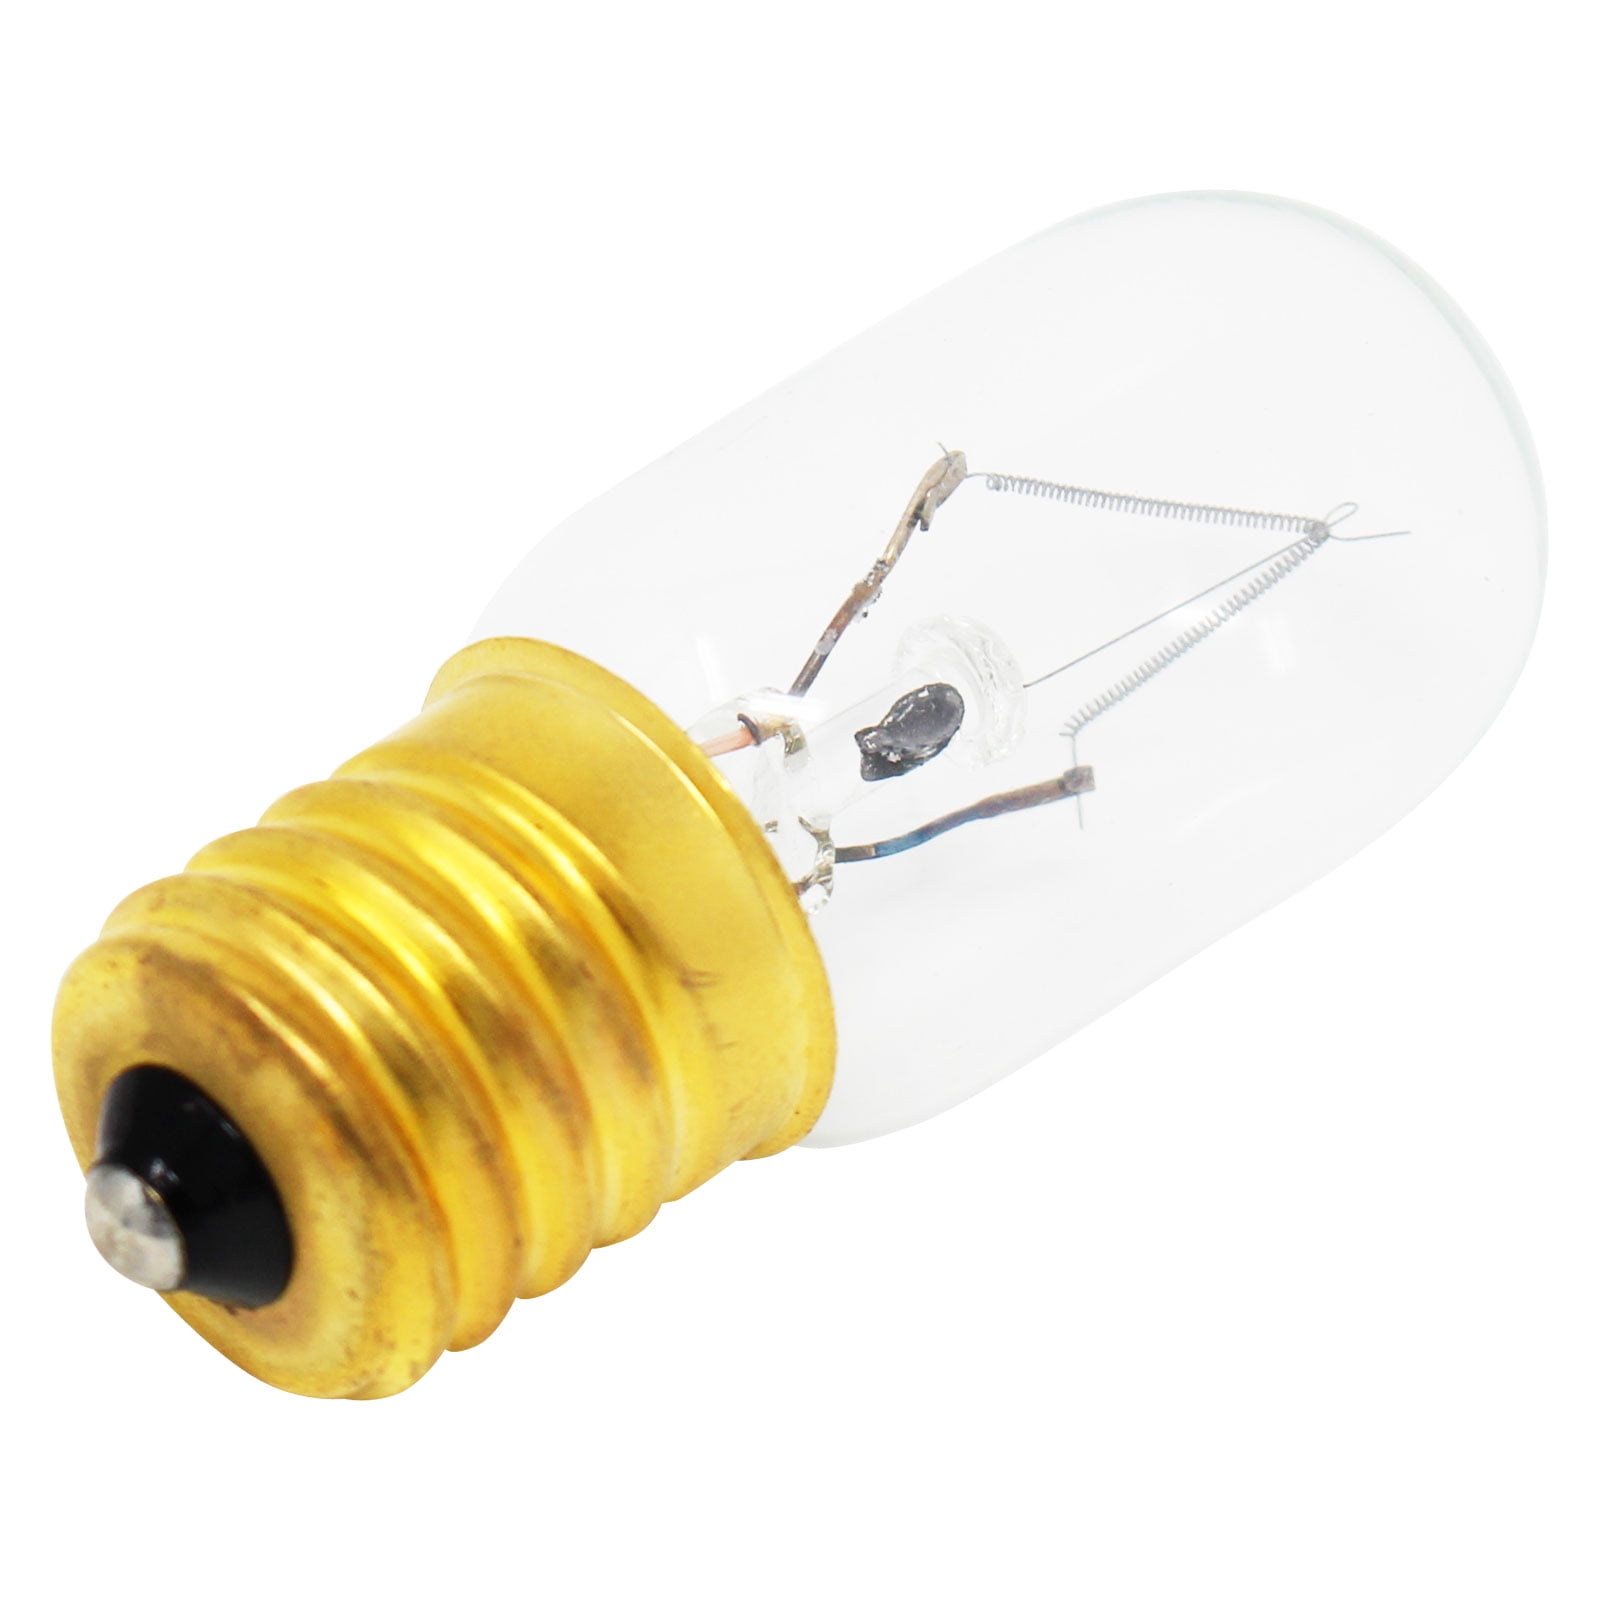 2 -Bulbs Anyray Replacement Bulbs for Amana Microwave model AMV5206BA 120V 20W 